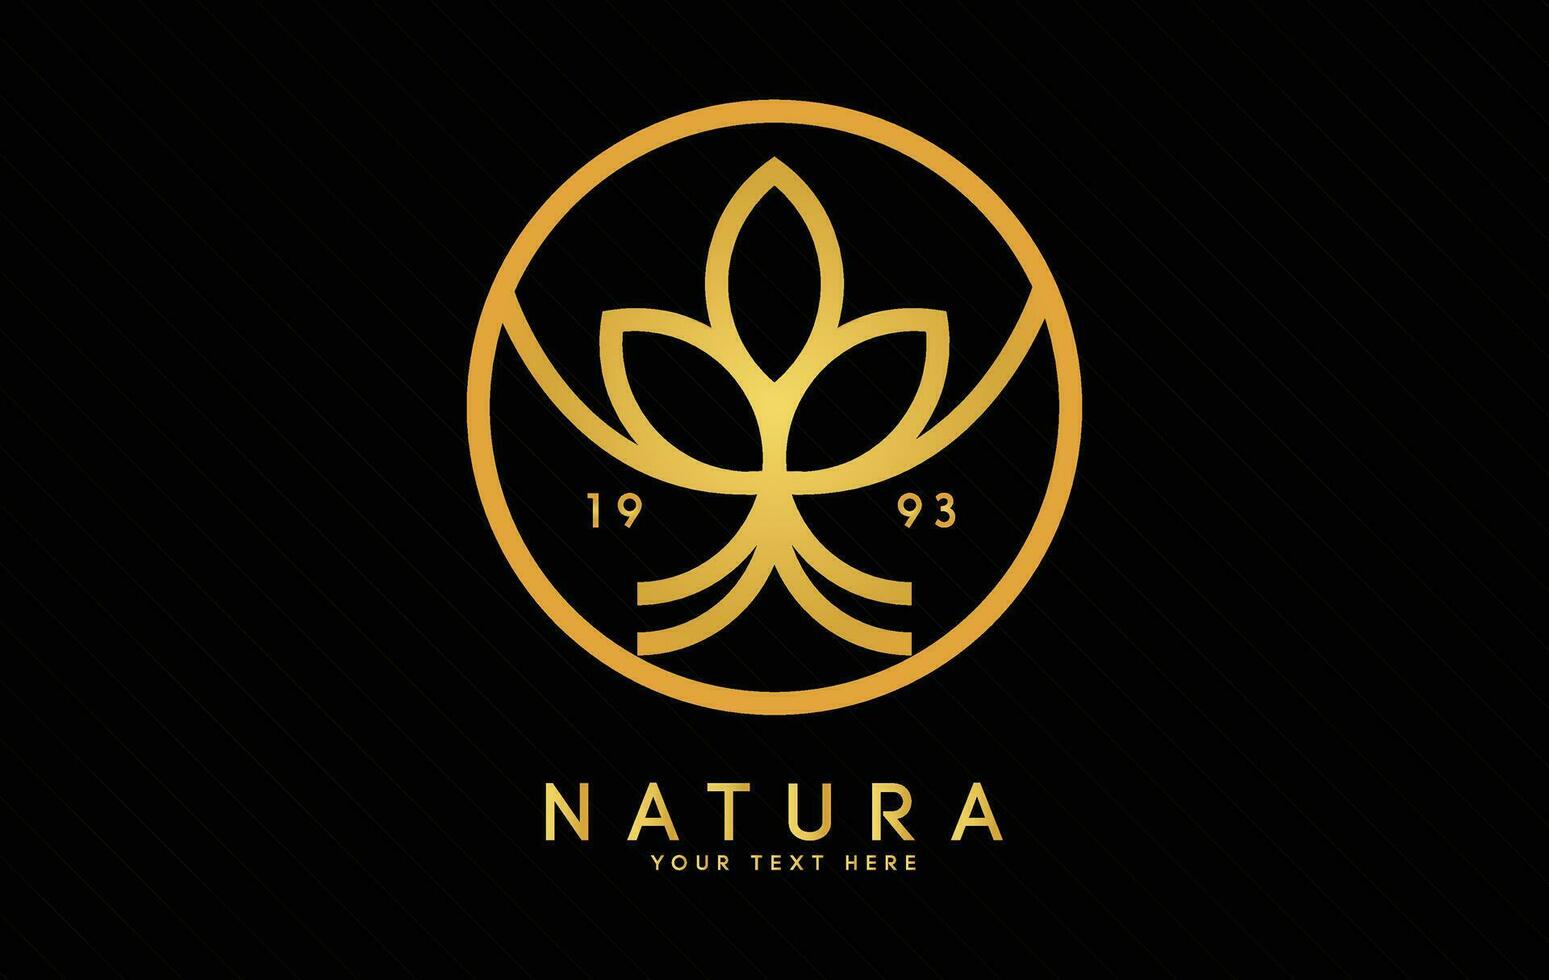 Luxury golden premium natural tree logo vector